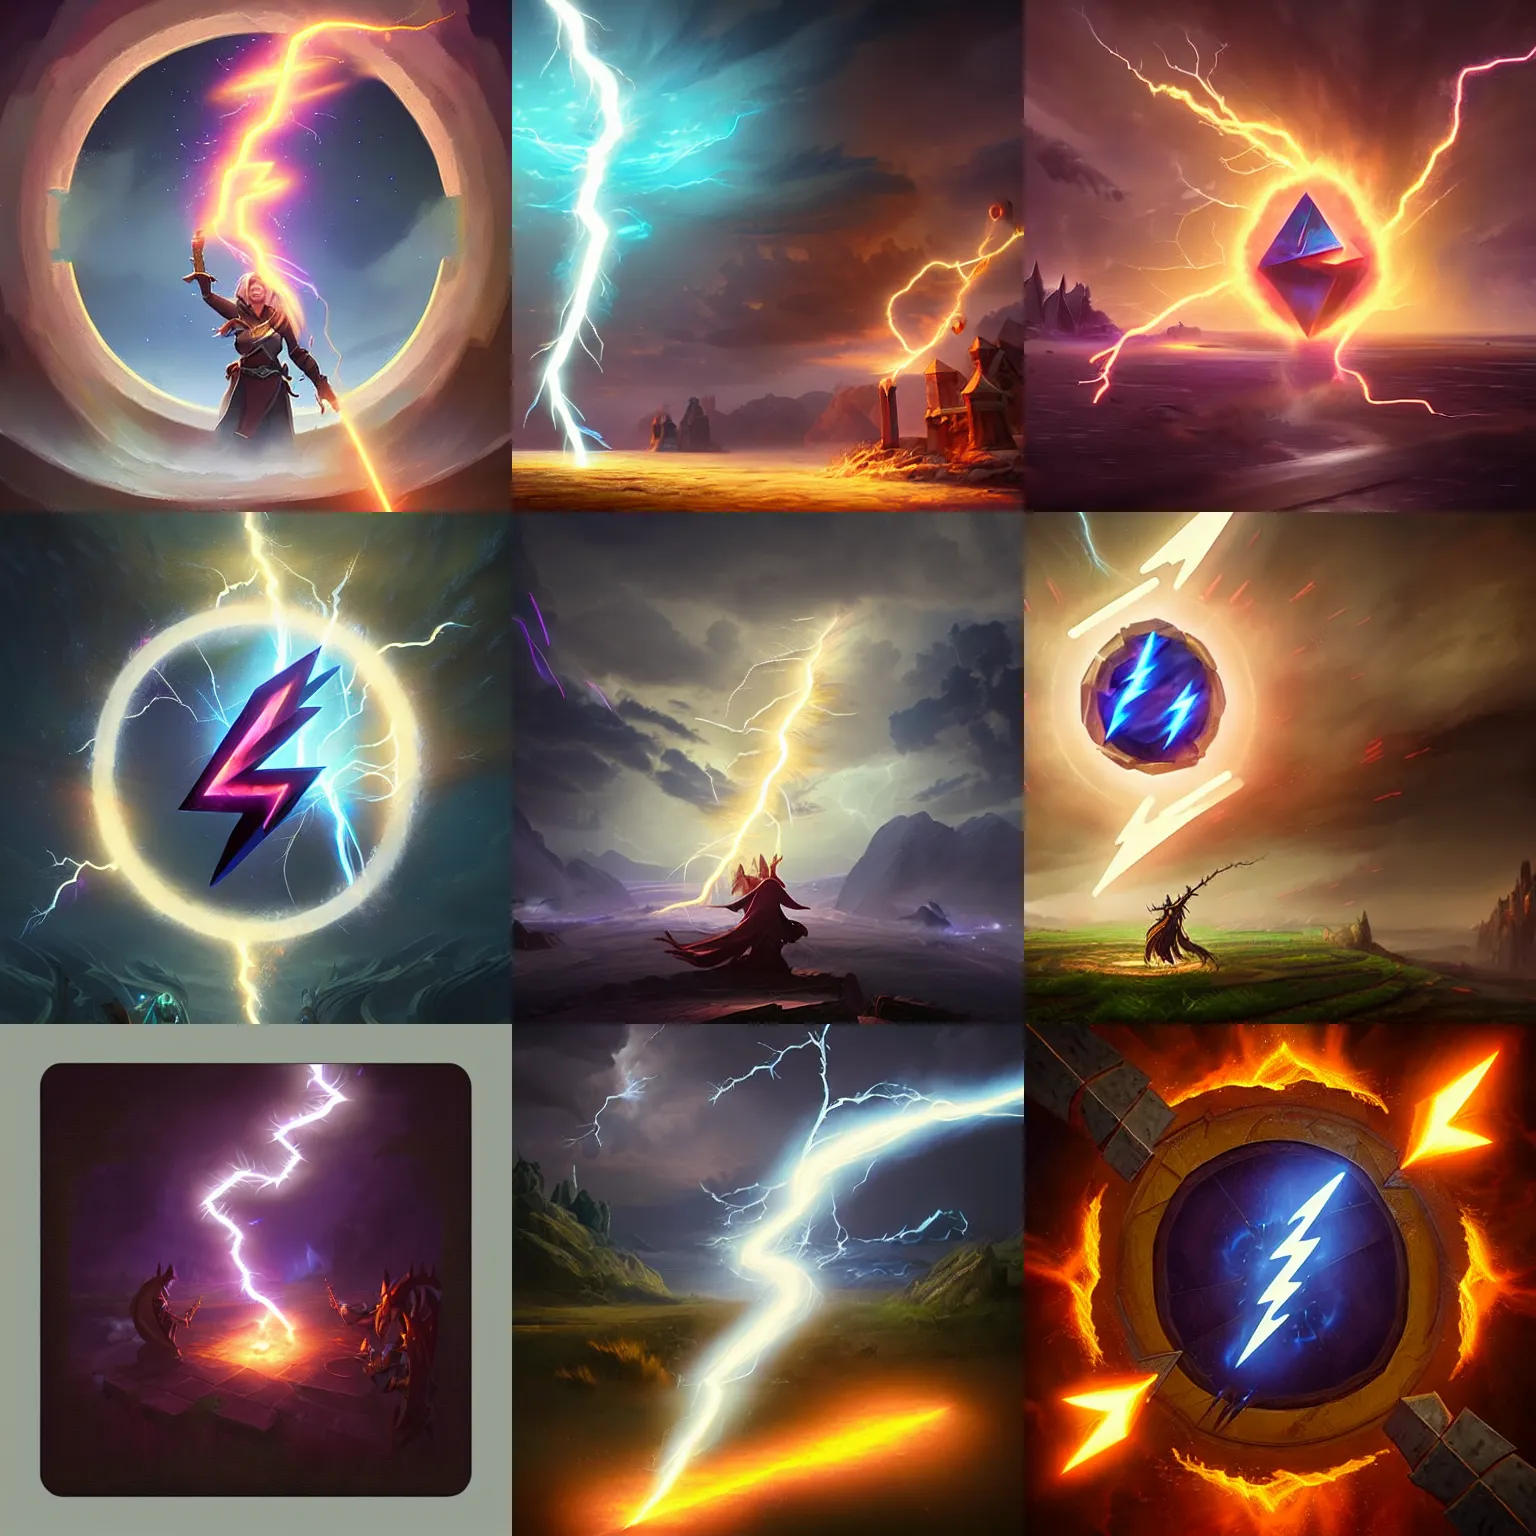 Prompt: lightning storm magic spell vfx, diagonal spell vfx, hearthstone style, fantasy game spell icon, fantasy epic digital art, by greg rutkowski